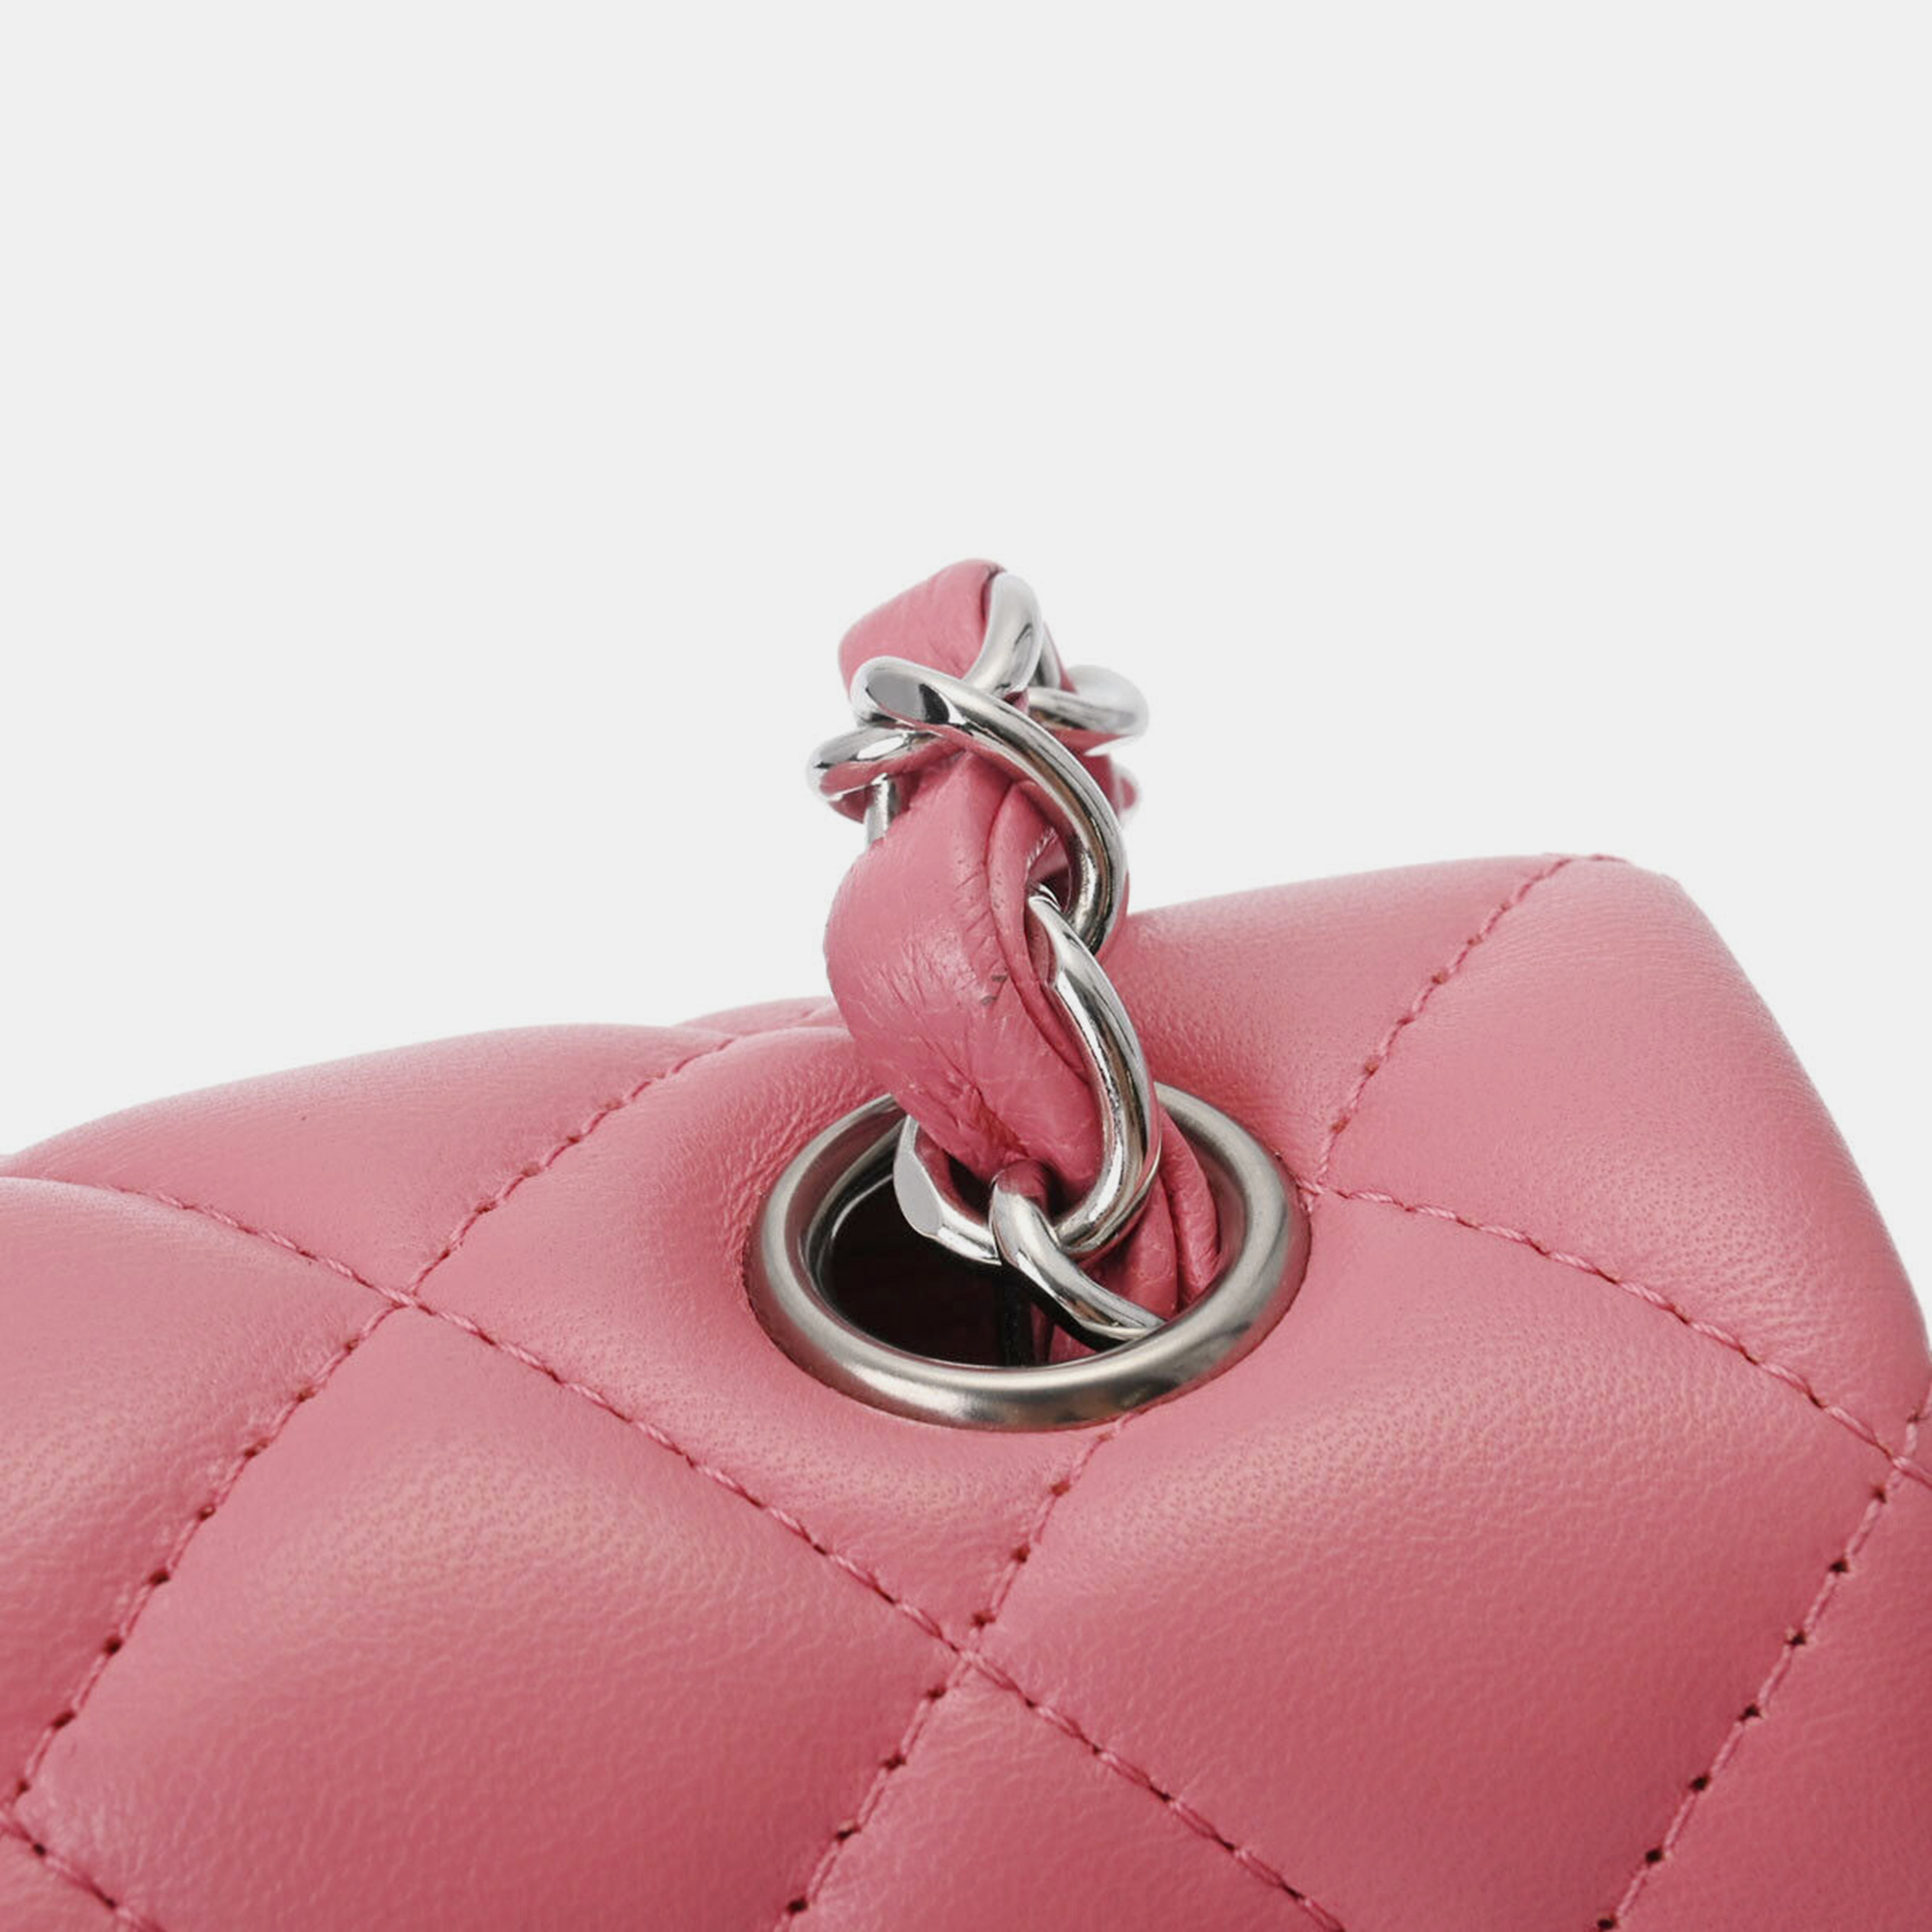 Chanel Pink Leather Classic Flap Shoulder Bag